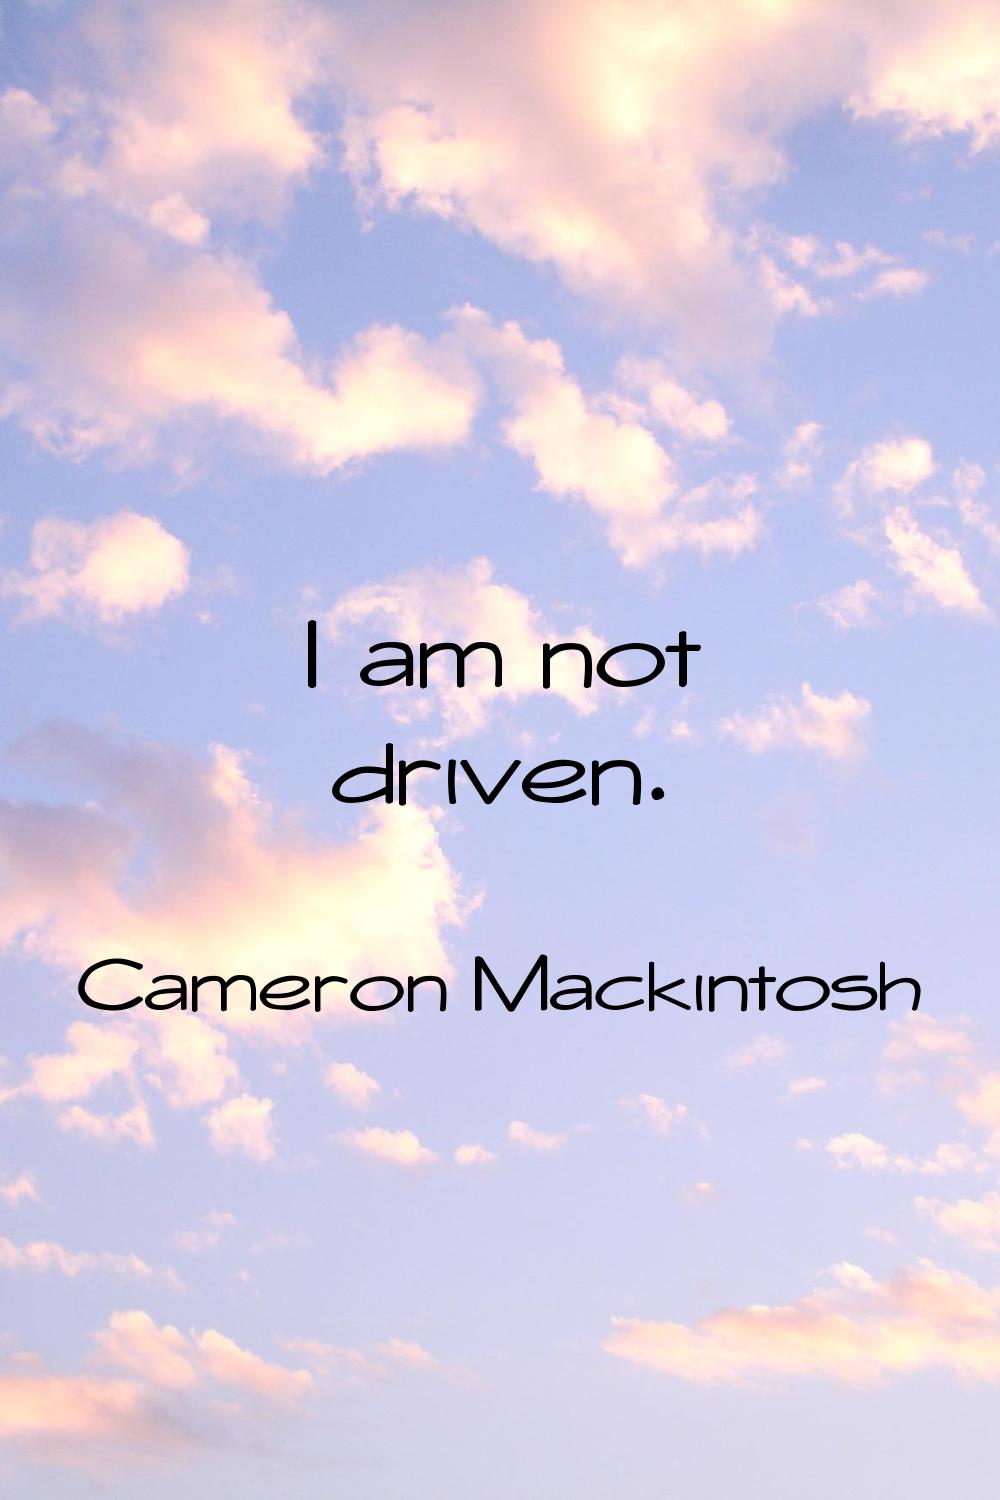 I am not driven.